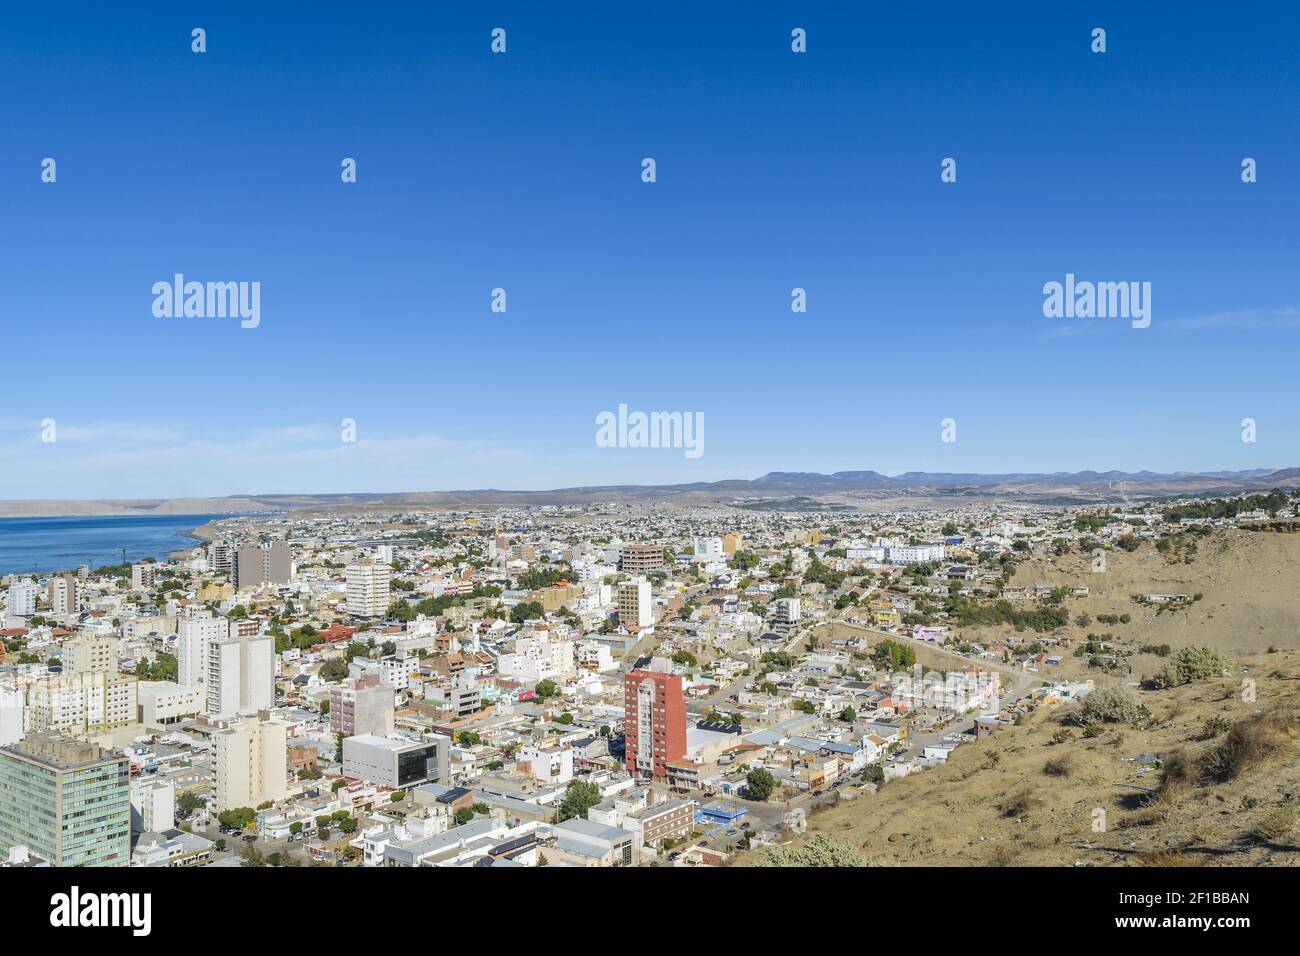 Aerial View of Comodoro Rivadavia City, Argentina Stock Photo